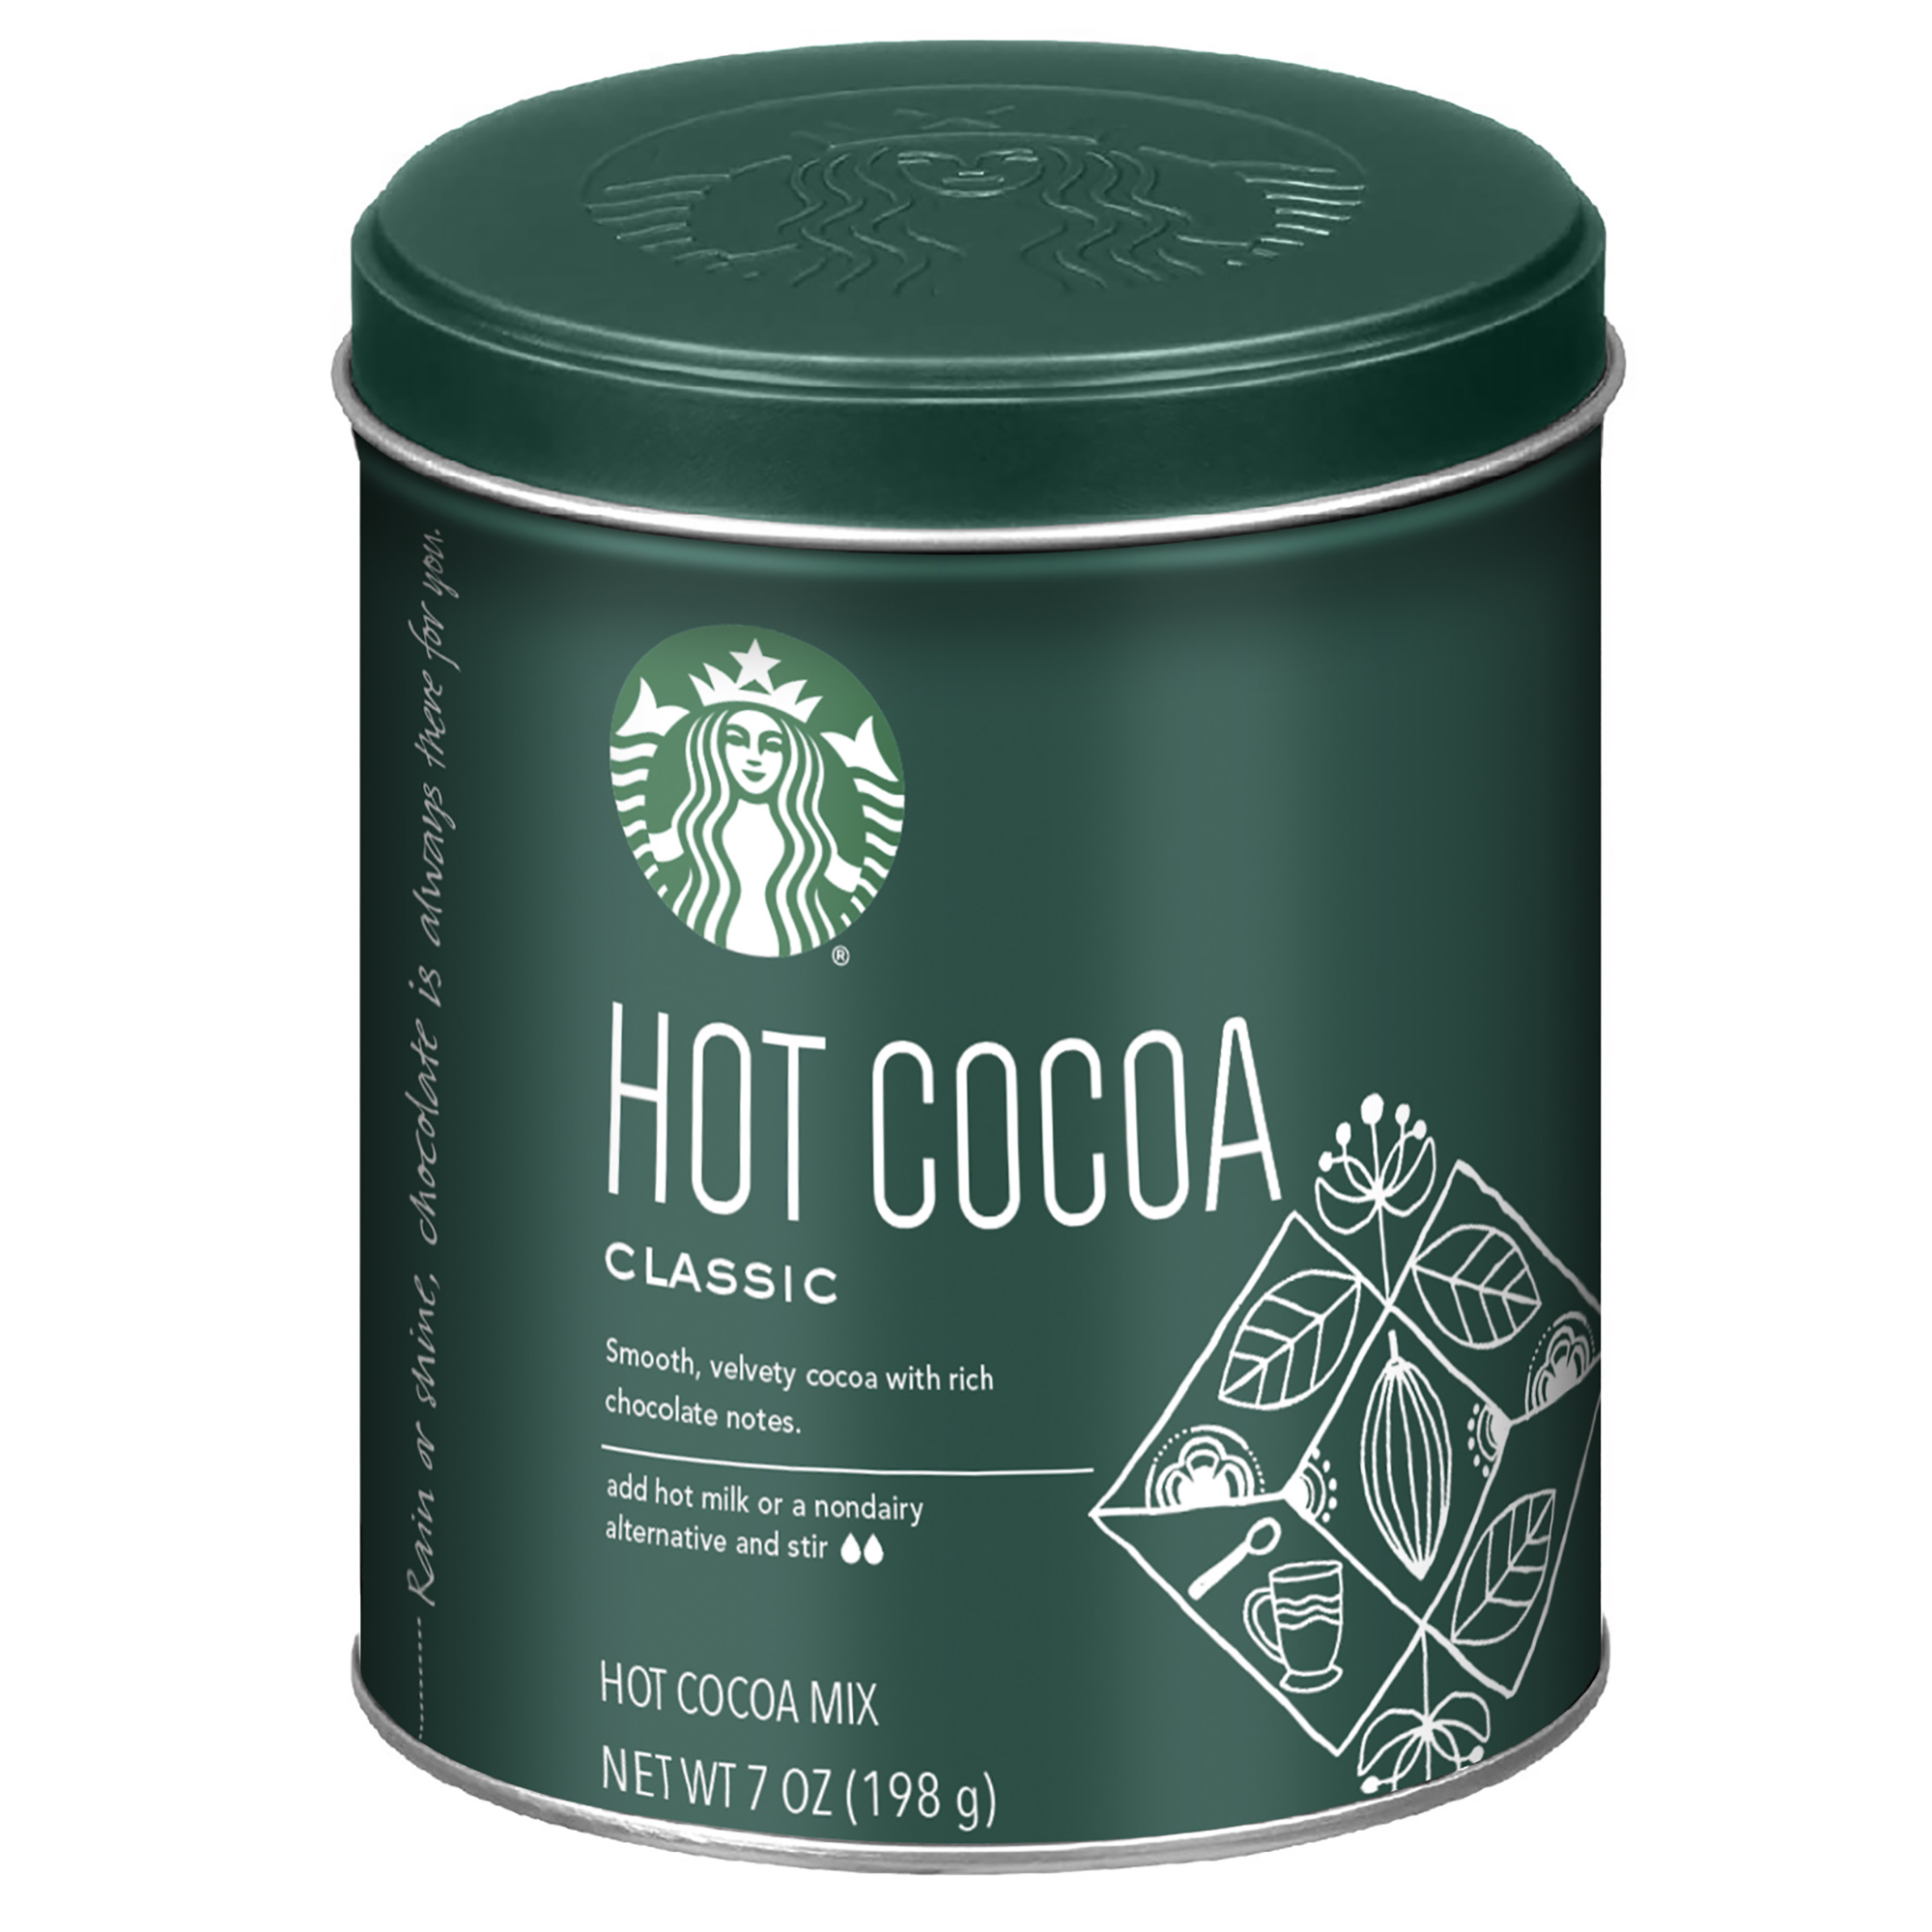 Starbucks Classic Hot Cocoa 7 oz. Tin - image 1 of 2